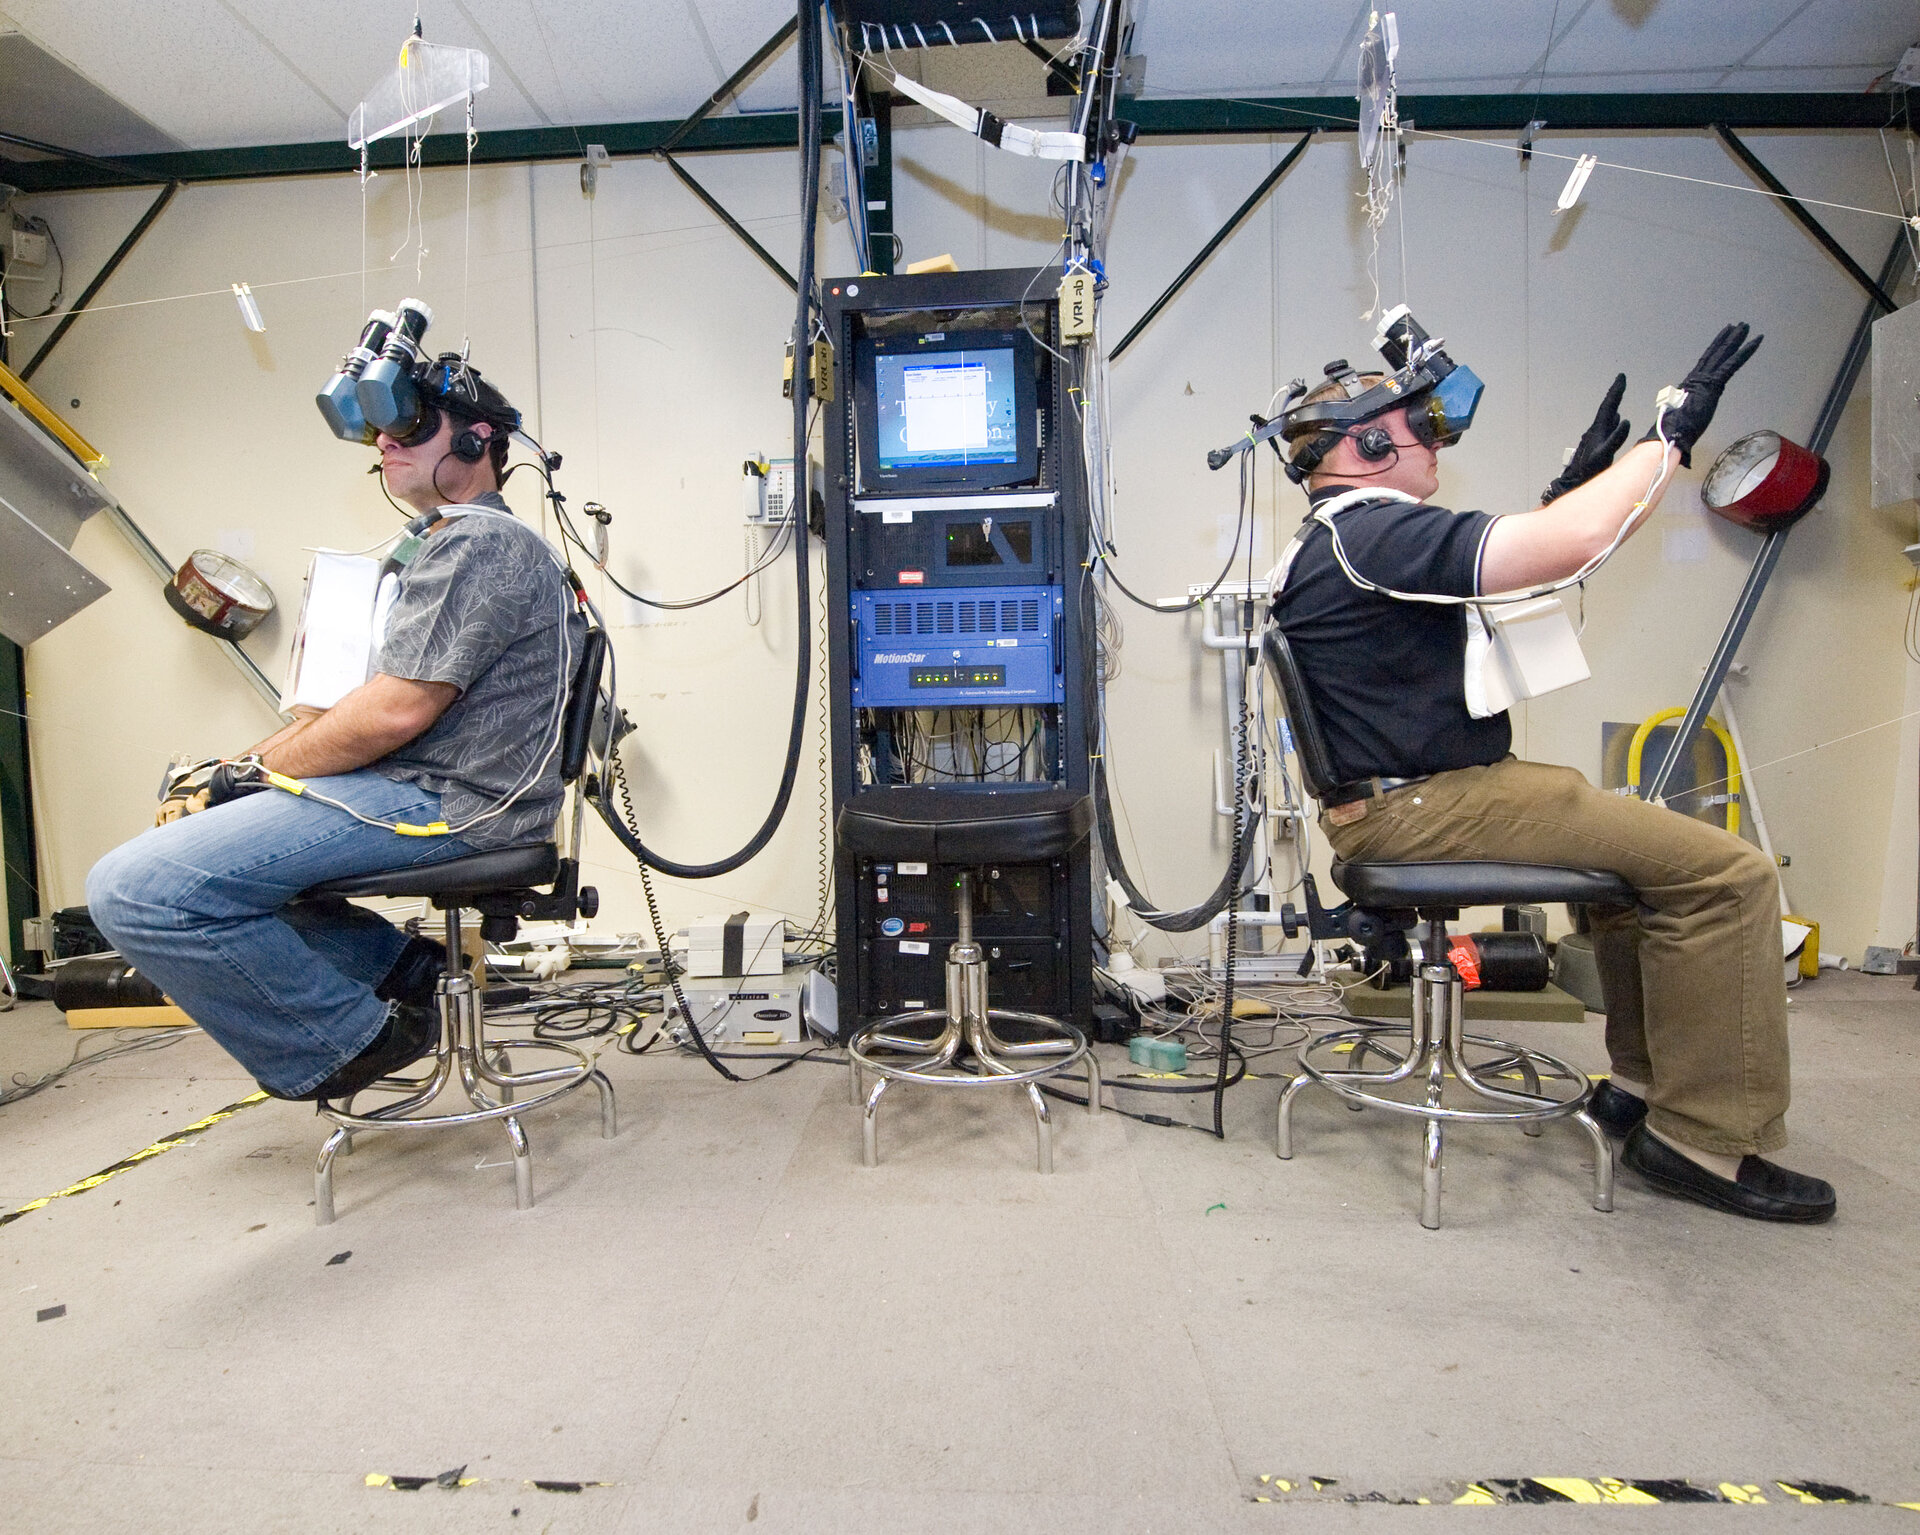 Michael Fincke and Greg Chamitoff use virtual reality hardware